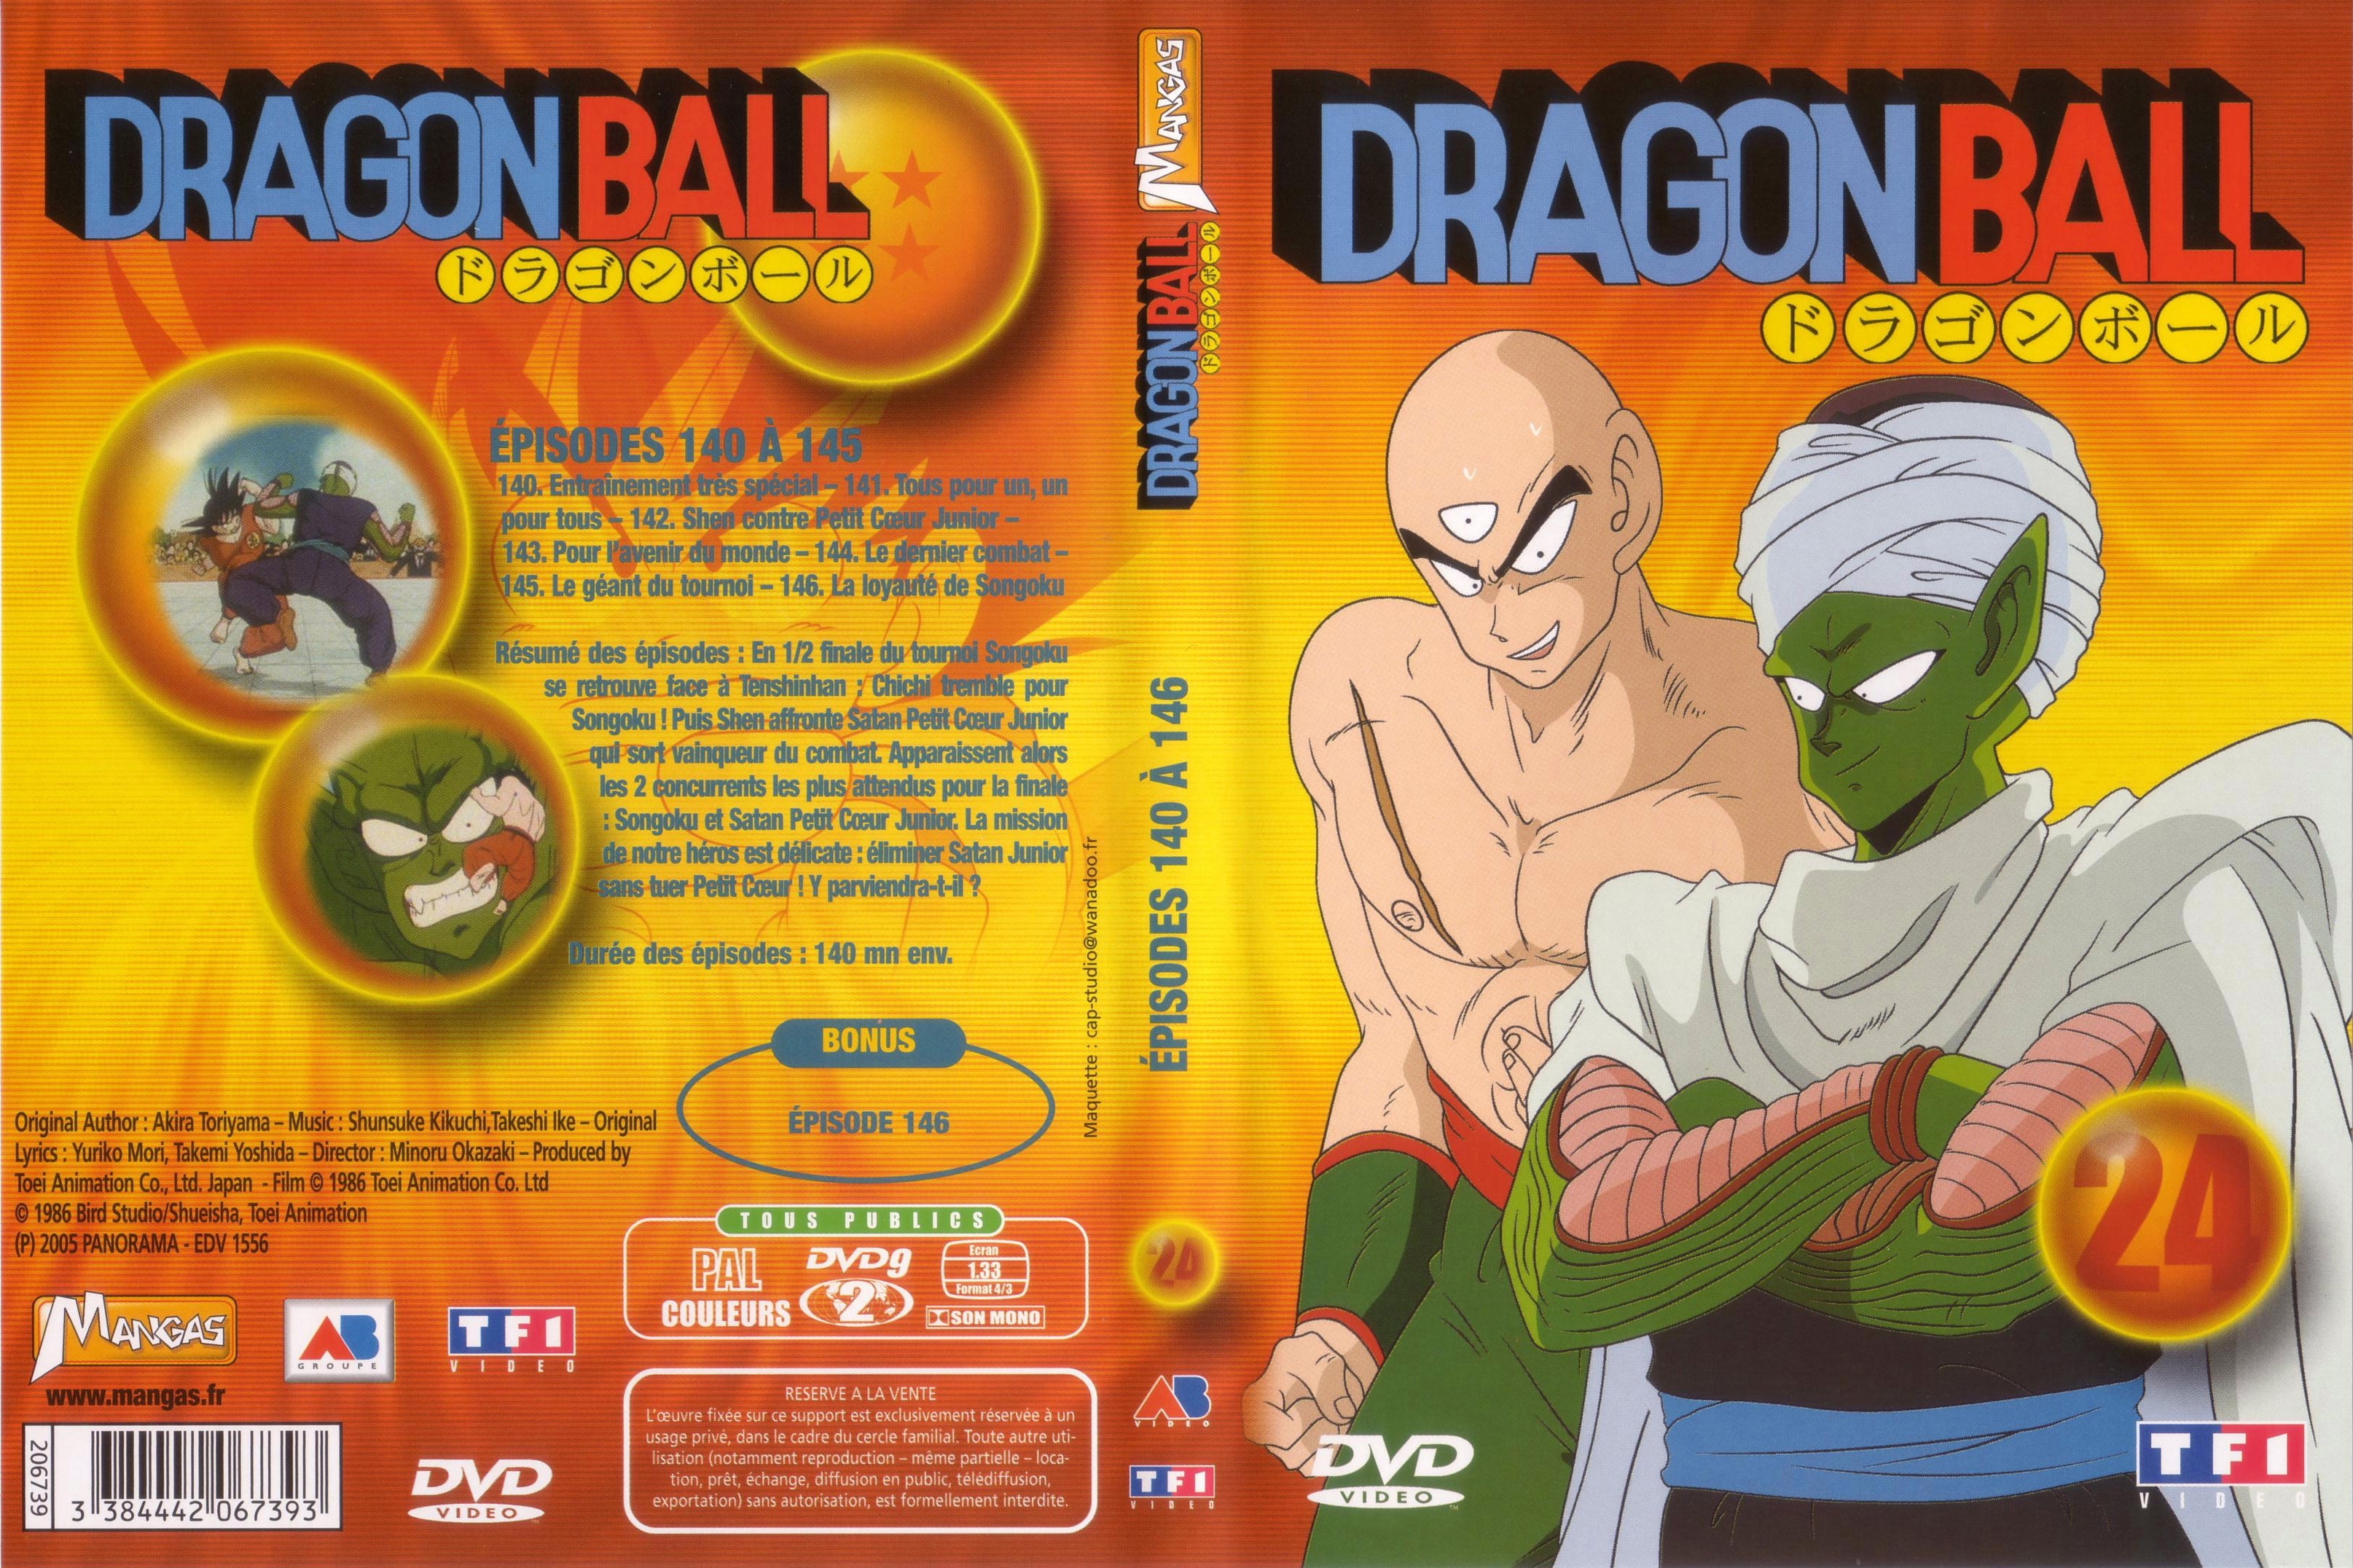 Jaquette DVD Dragon ball vol 24